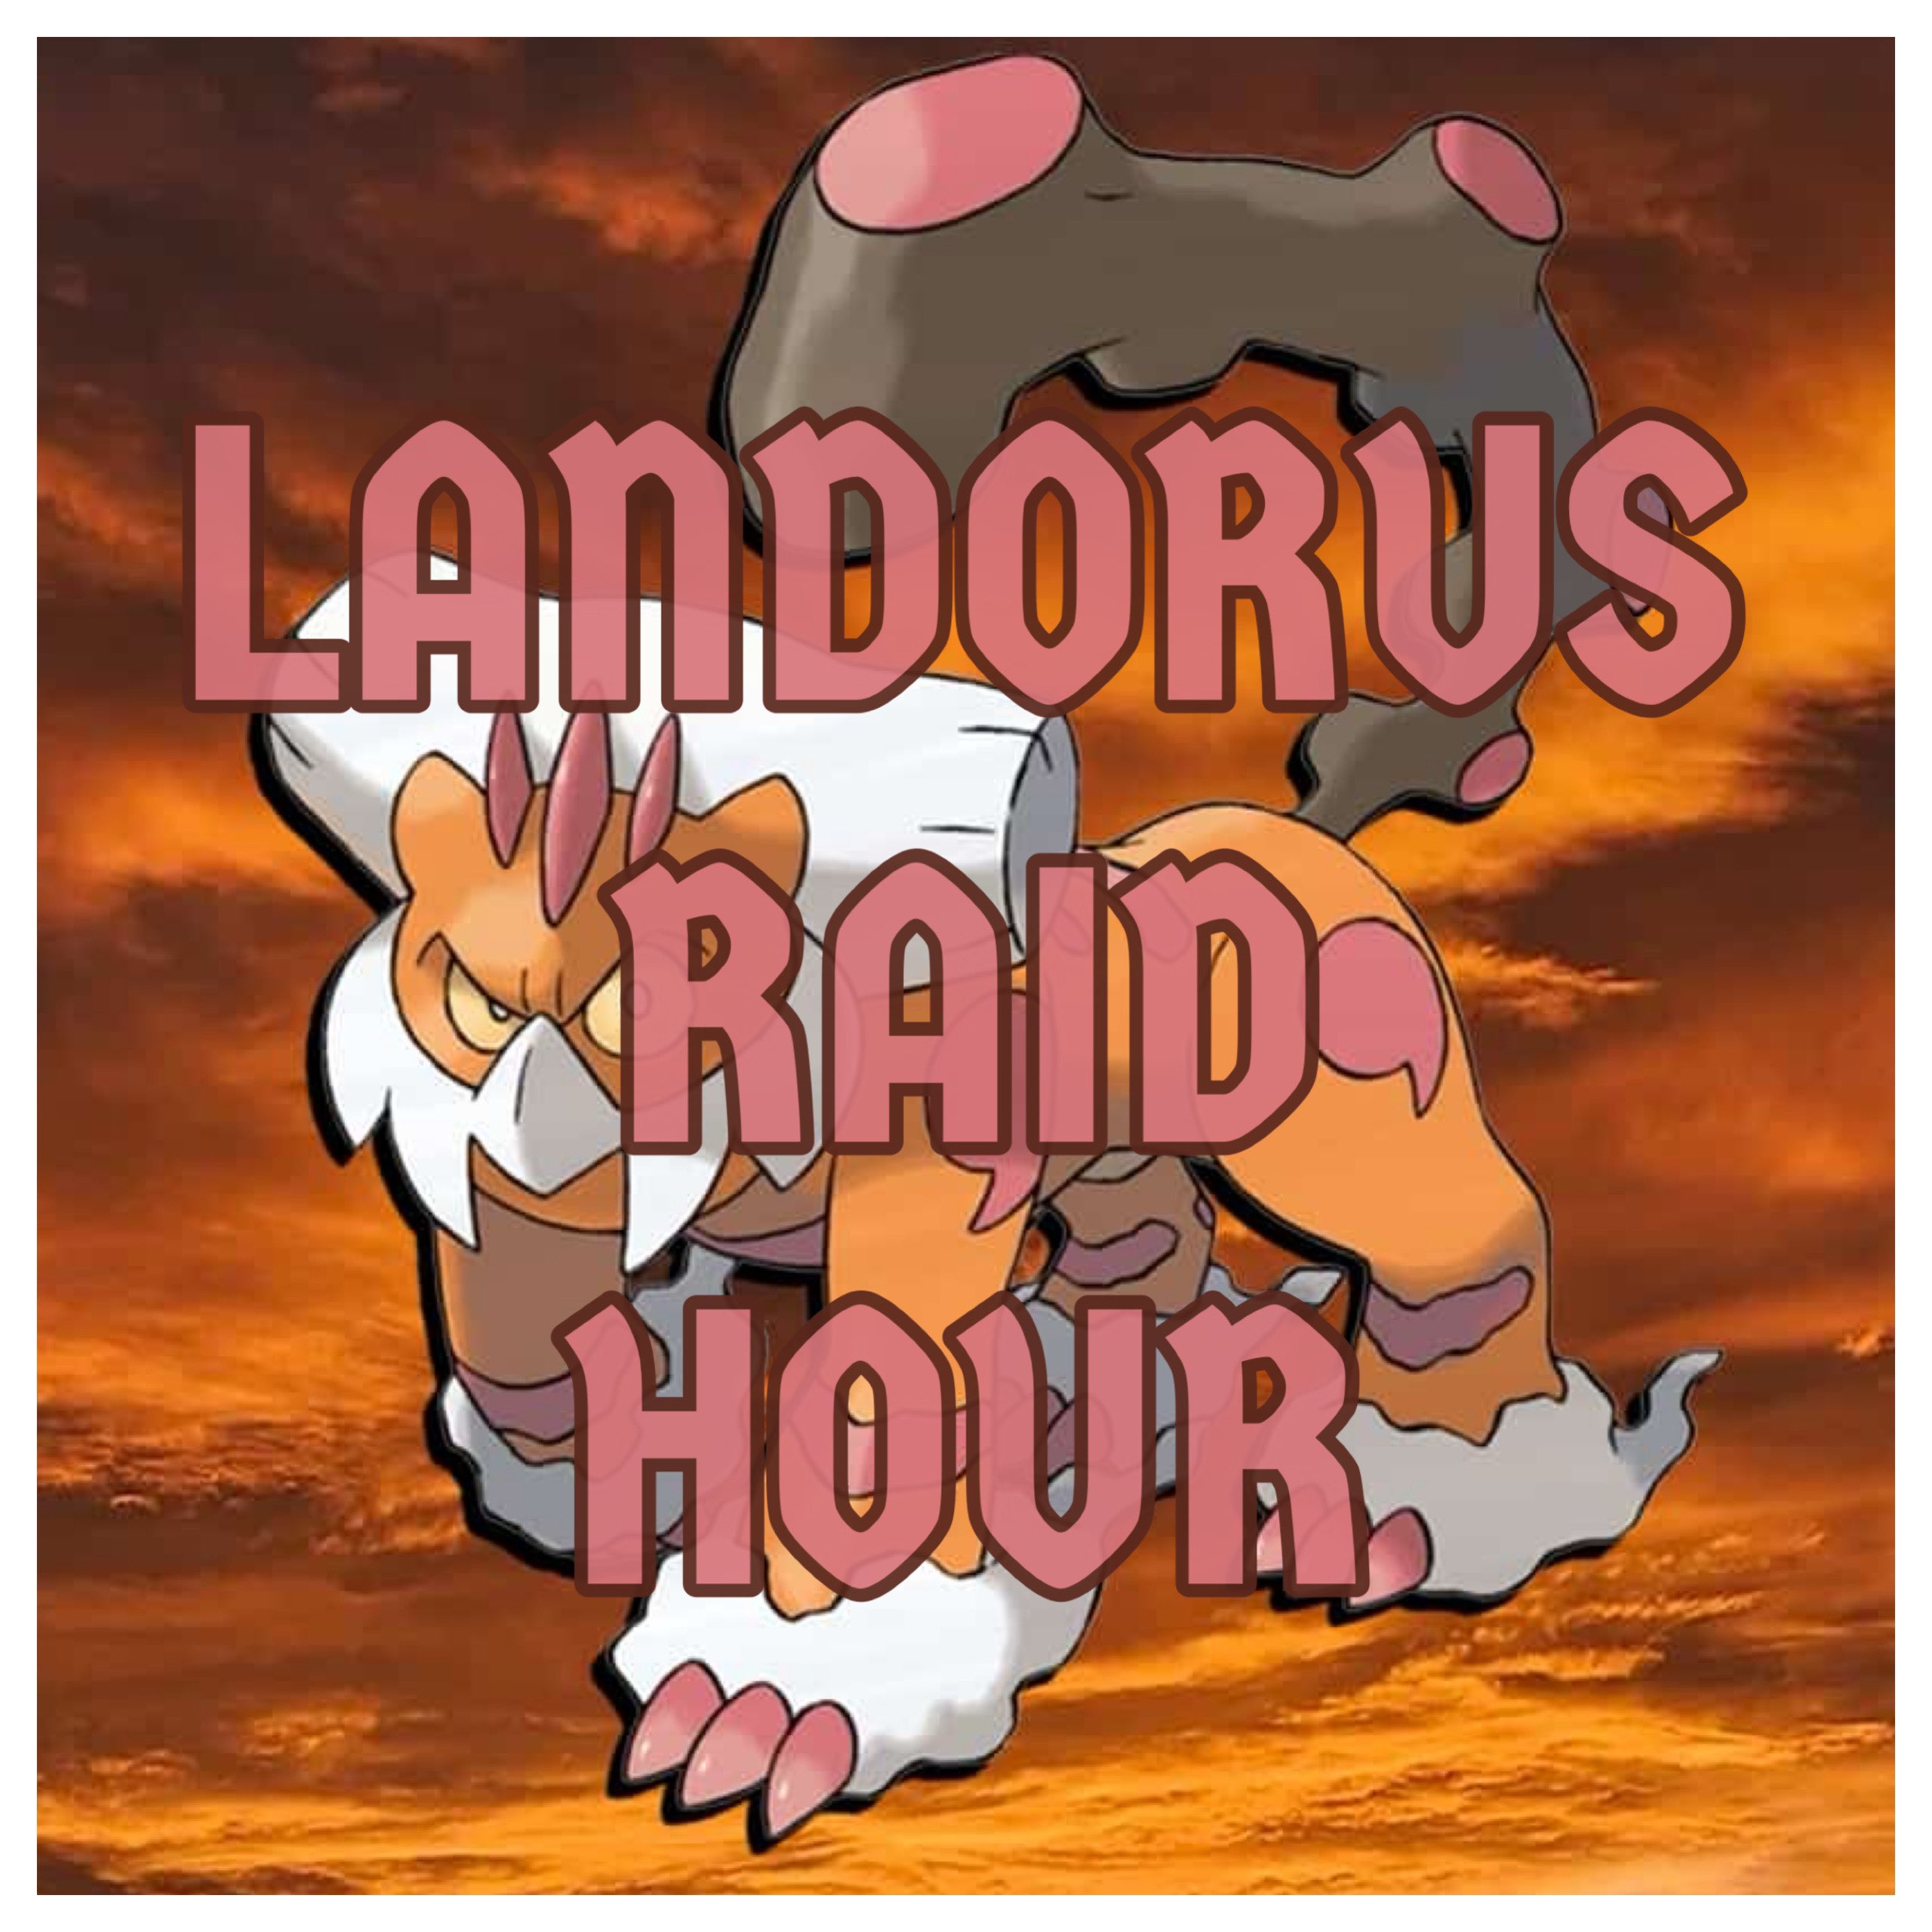 Landorus in the background, text on the foreground saying LANDORUS RAID HOUR